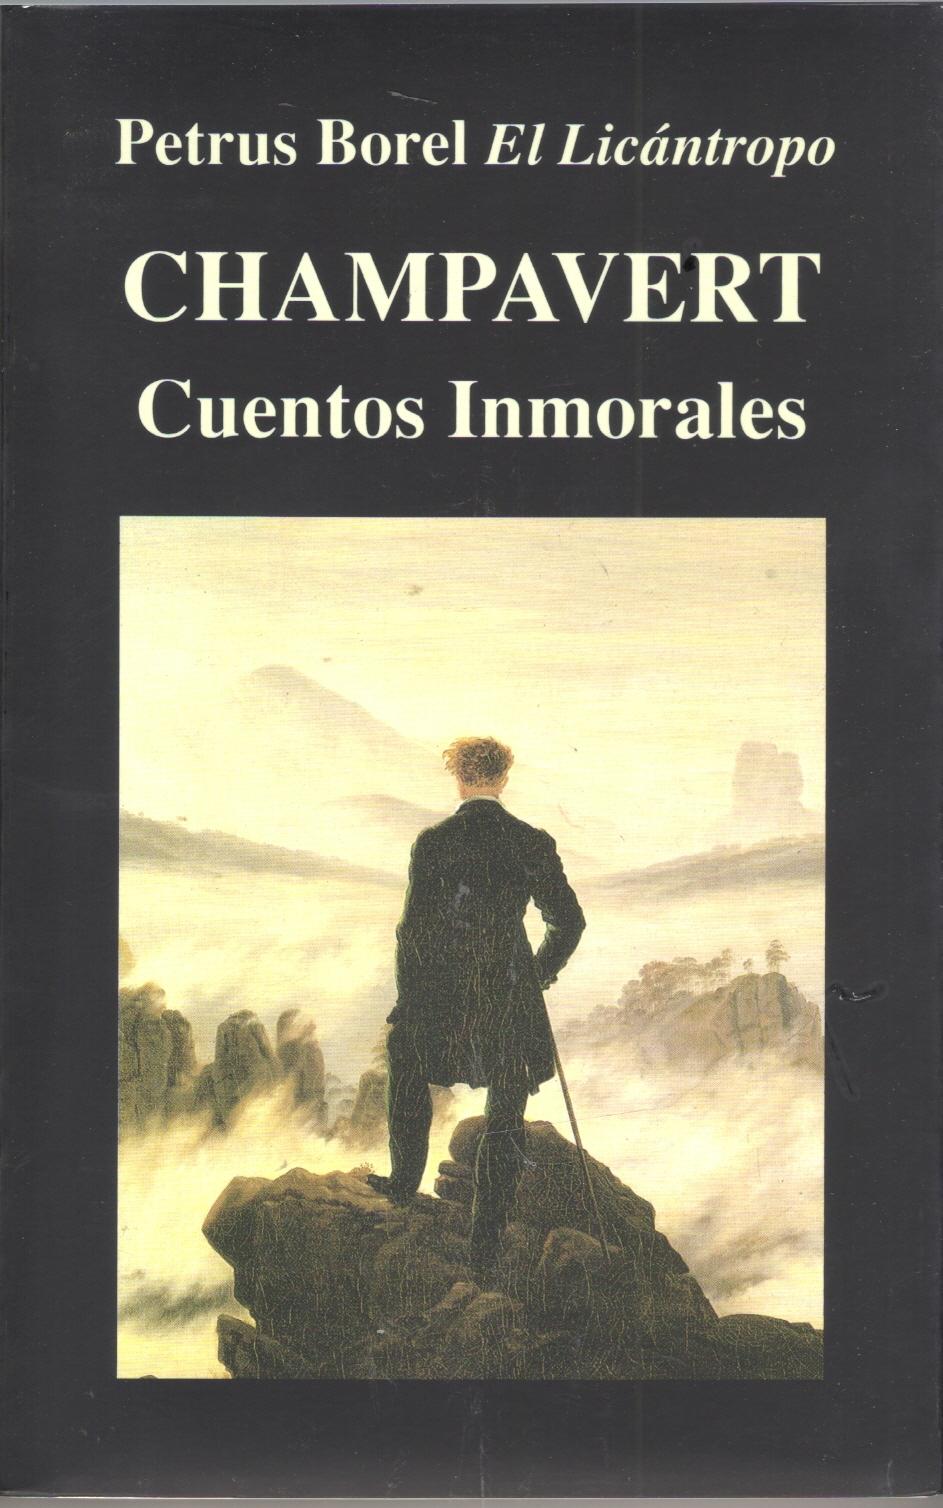 Champavert "Cuentos Inmorales"